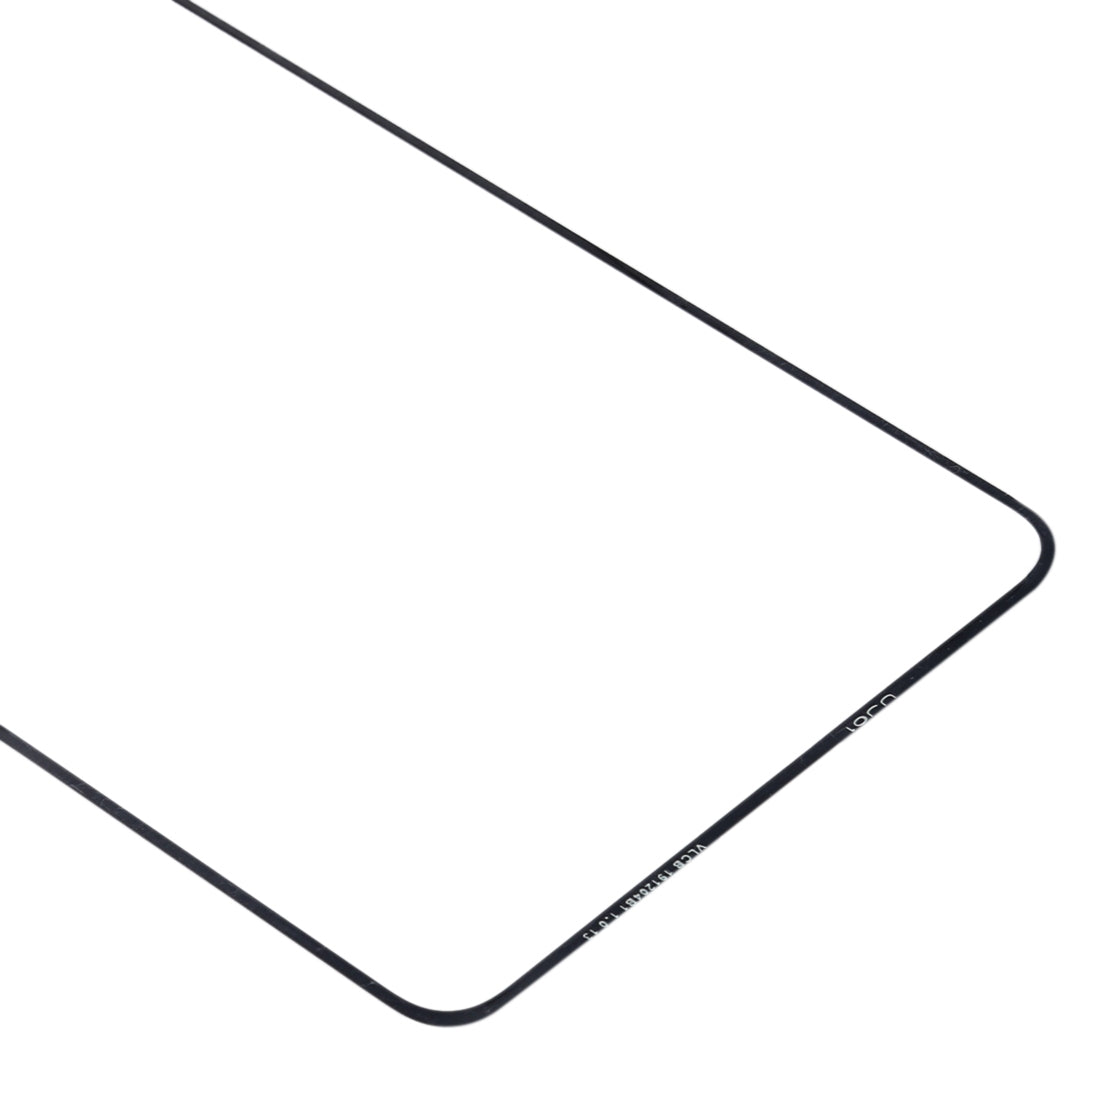 Cristal Pantalla Frontal + Adhesivo OCA Xiaomi Redmi 10x 4G